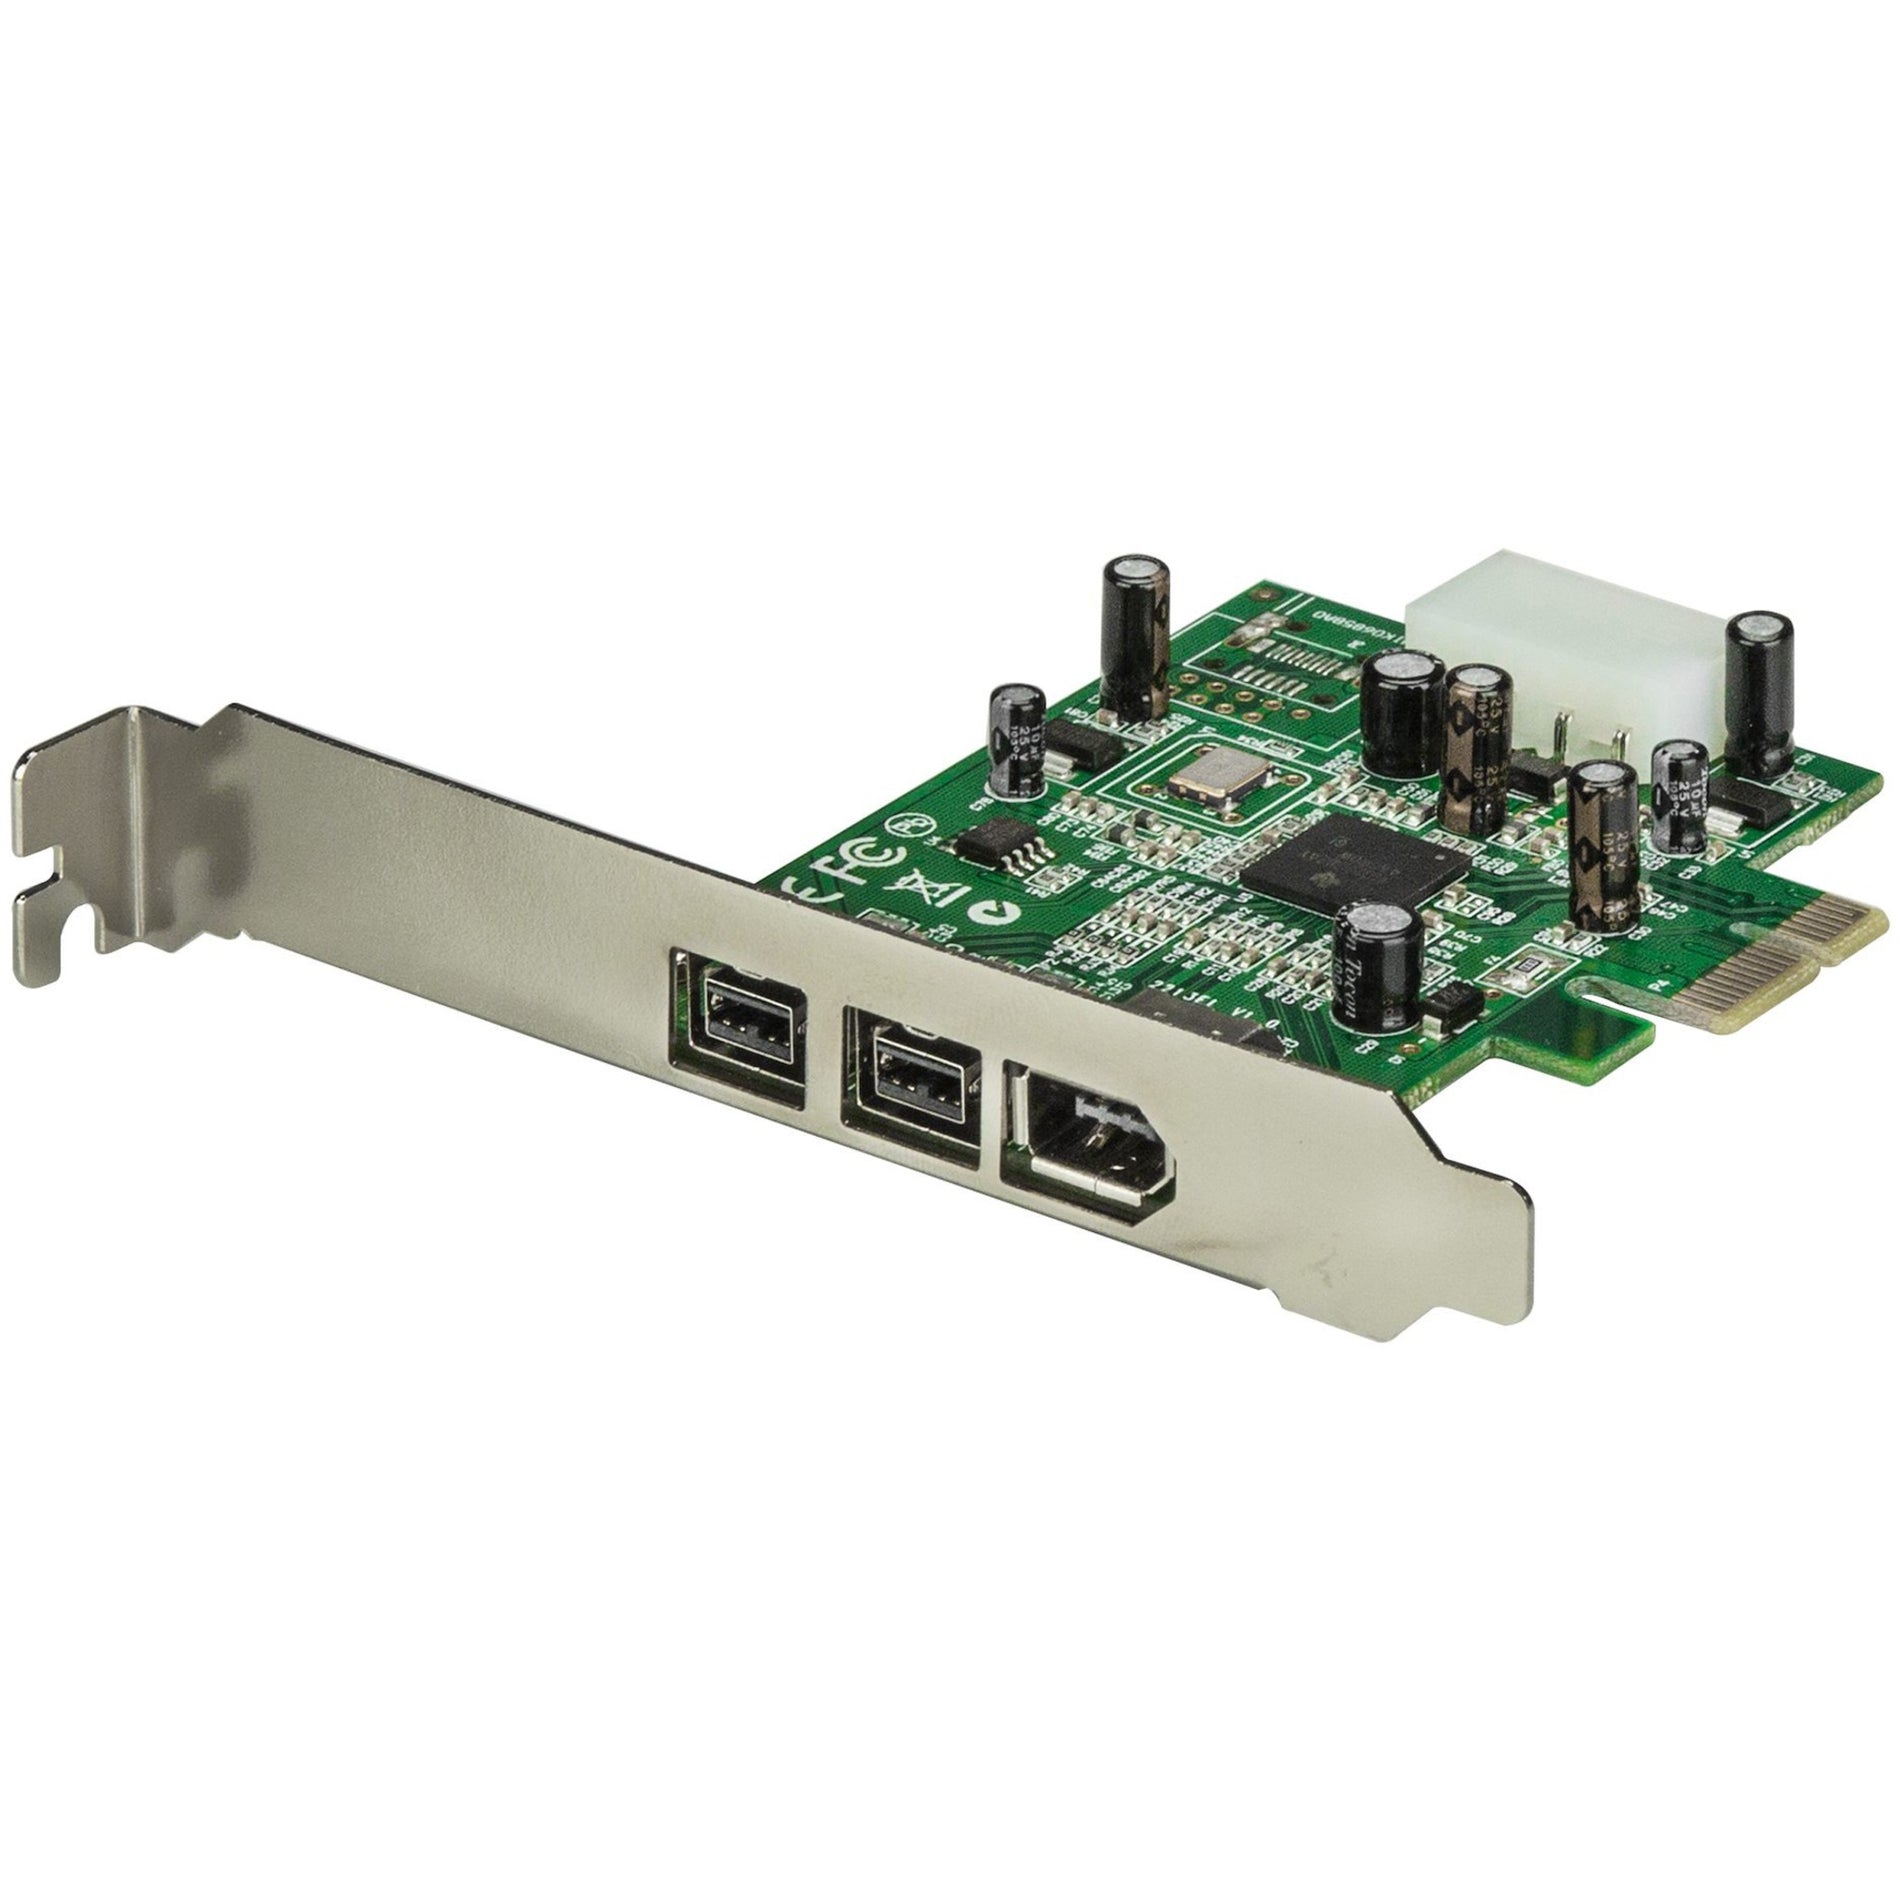 StarTech.com PEX1394B3 3 Port 2b 1a 1394 PCI Express FireWire Card Adapter High-Speed Data Transfer and Easy Connectivity